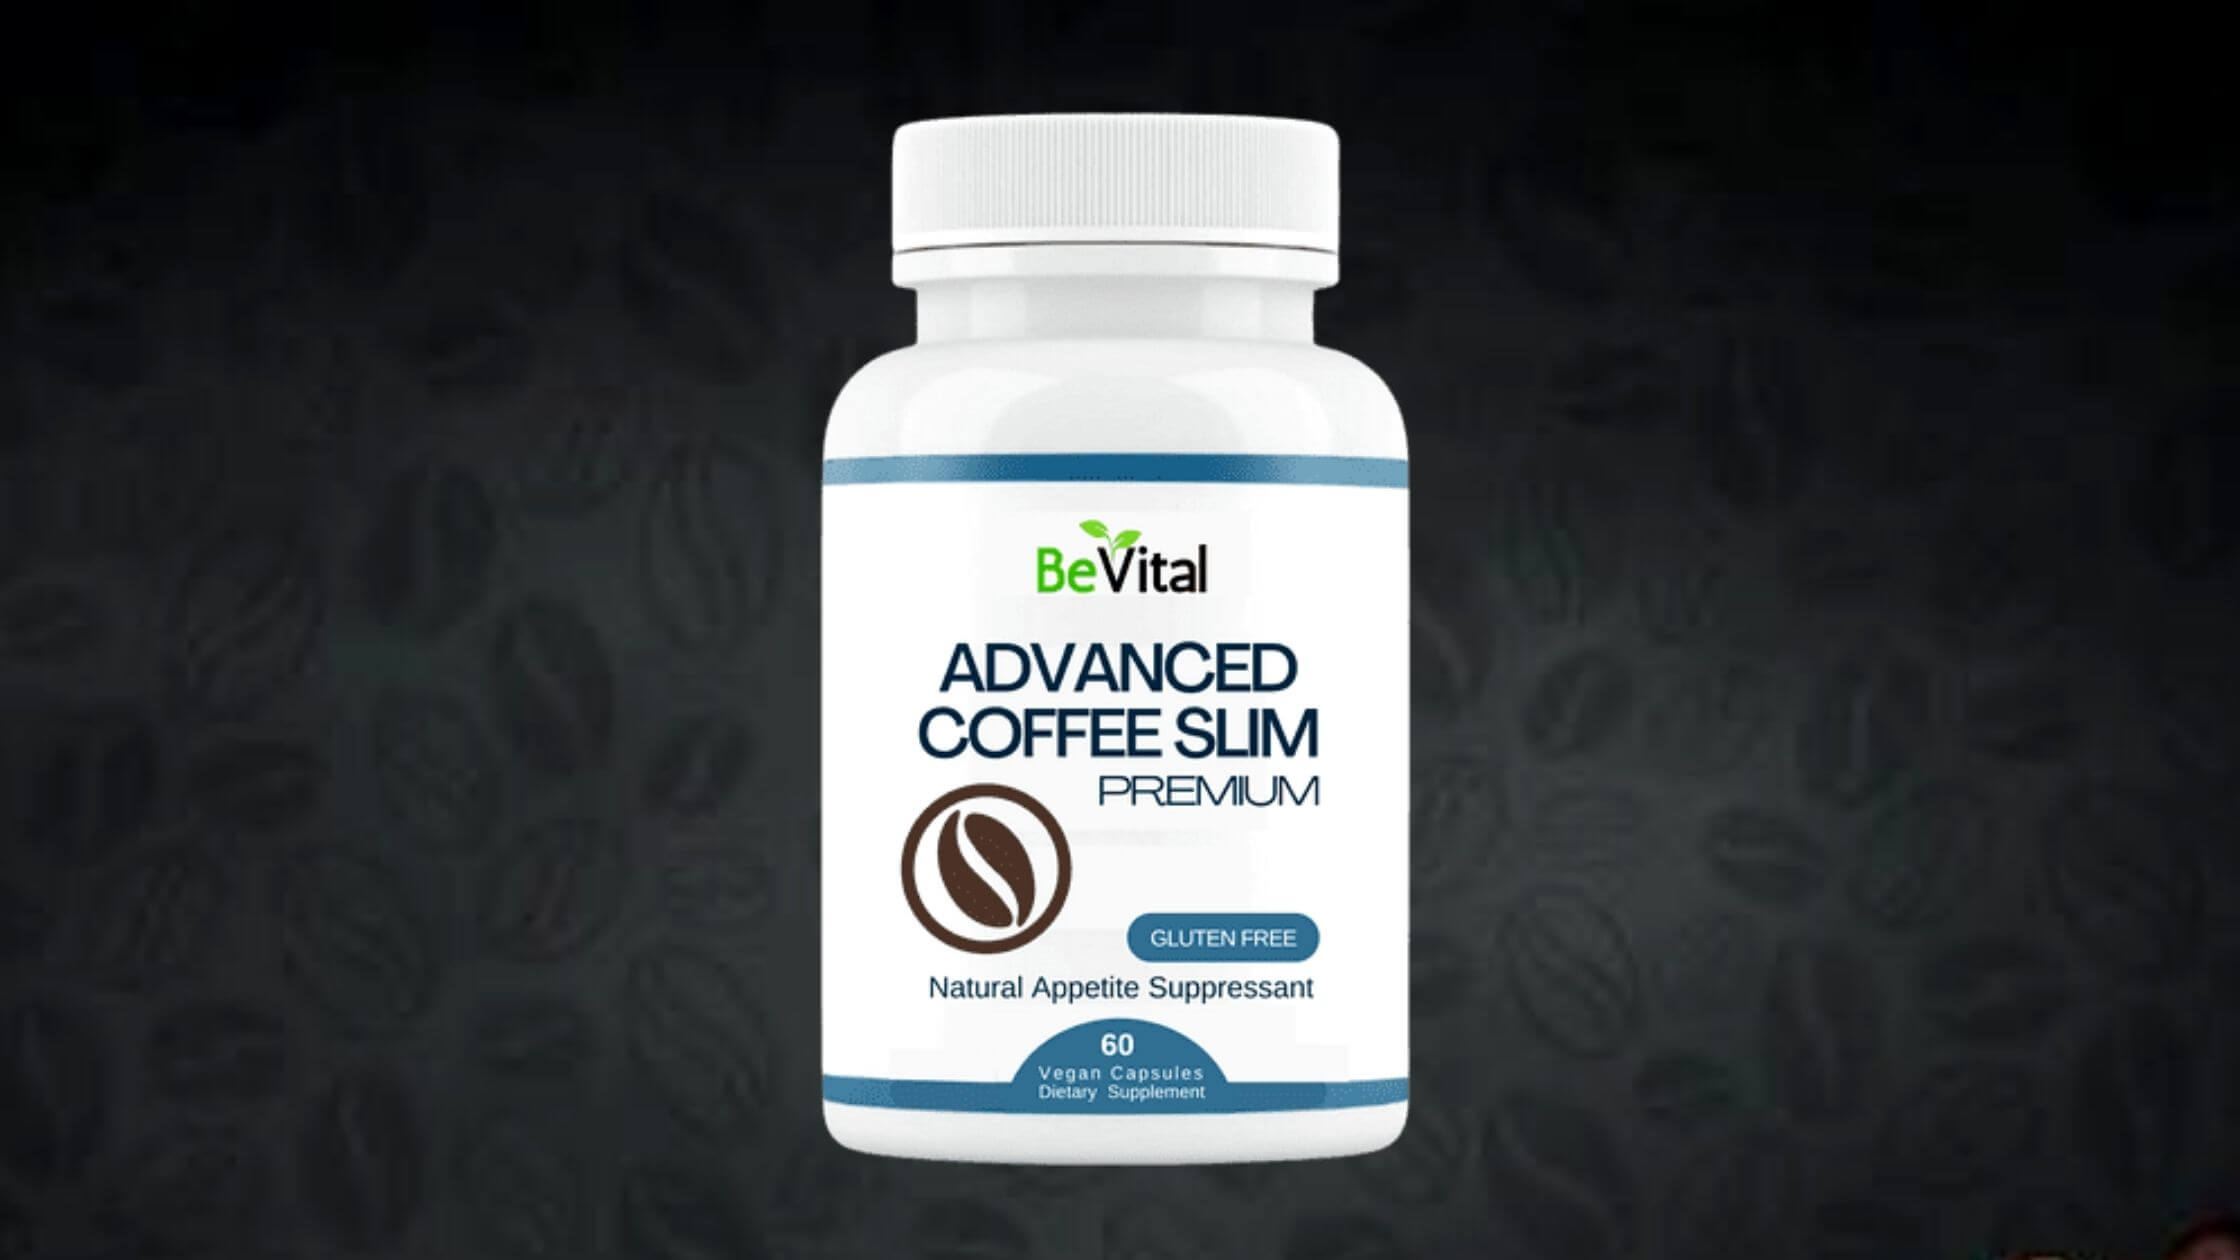 BeVital Advanced Coffee Slim Review